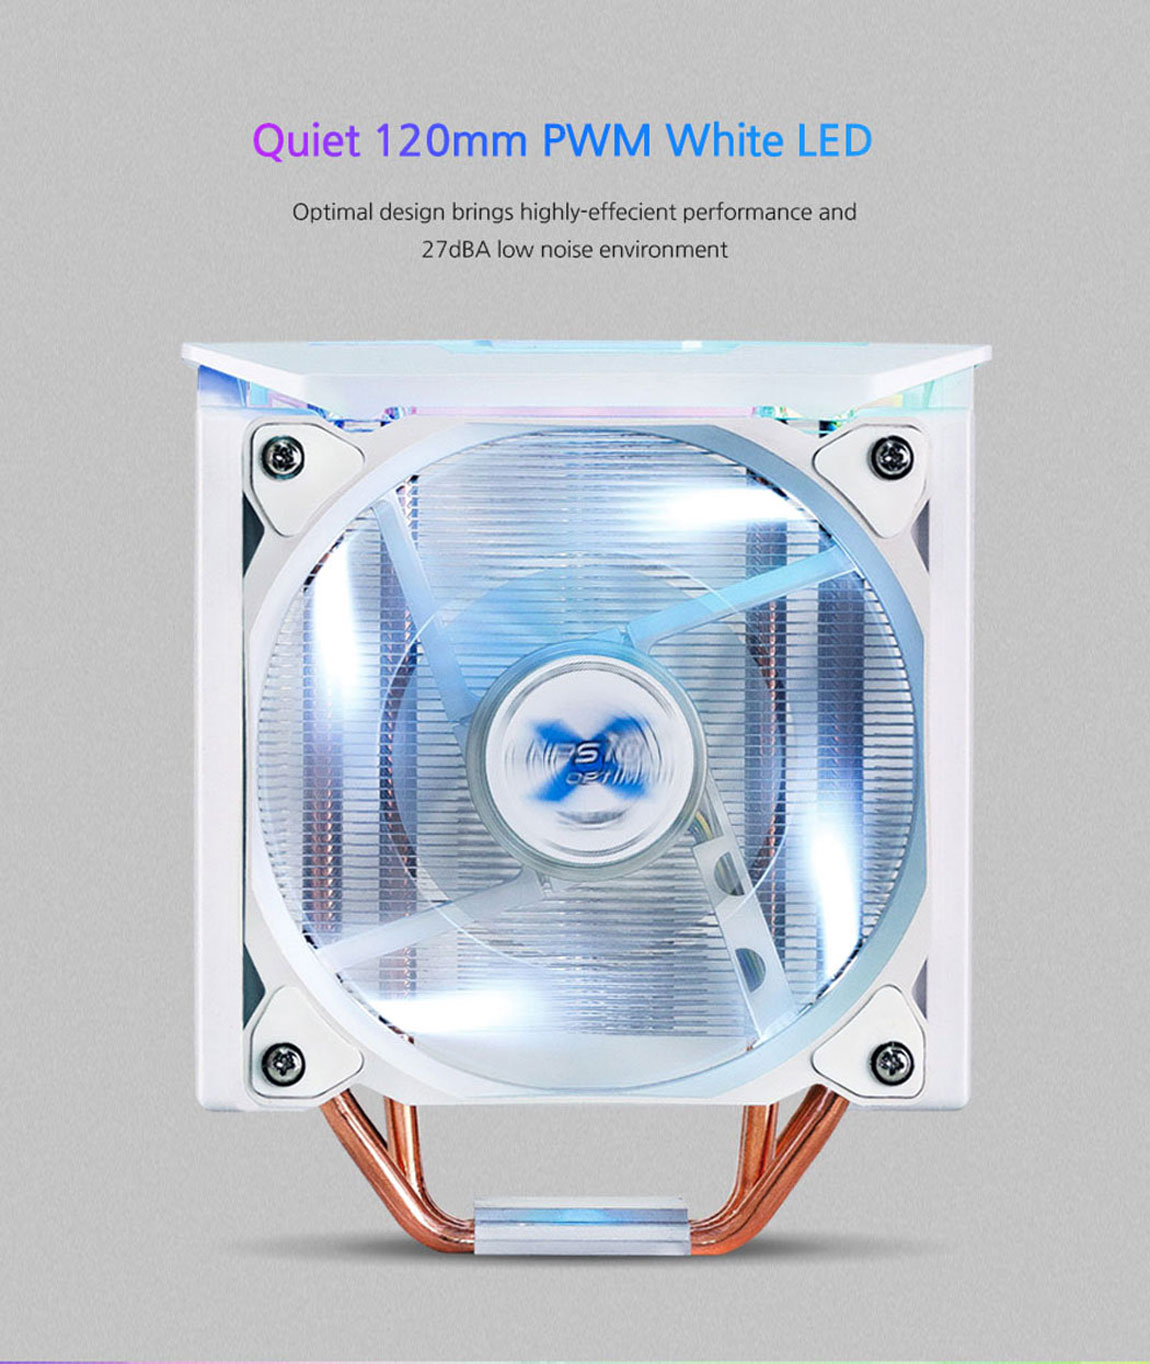 Ventirad CPU - ZALMAN - CNPS10X Optima II - Blanc (CNPS10XOPIIRGB-WH) -  Ventilateur PC - Achat & prix